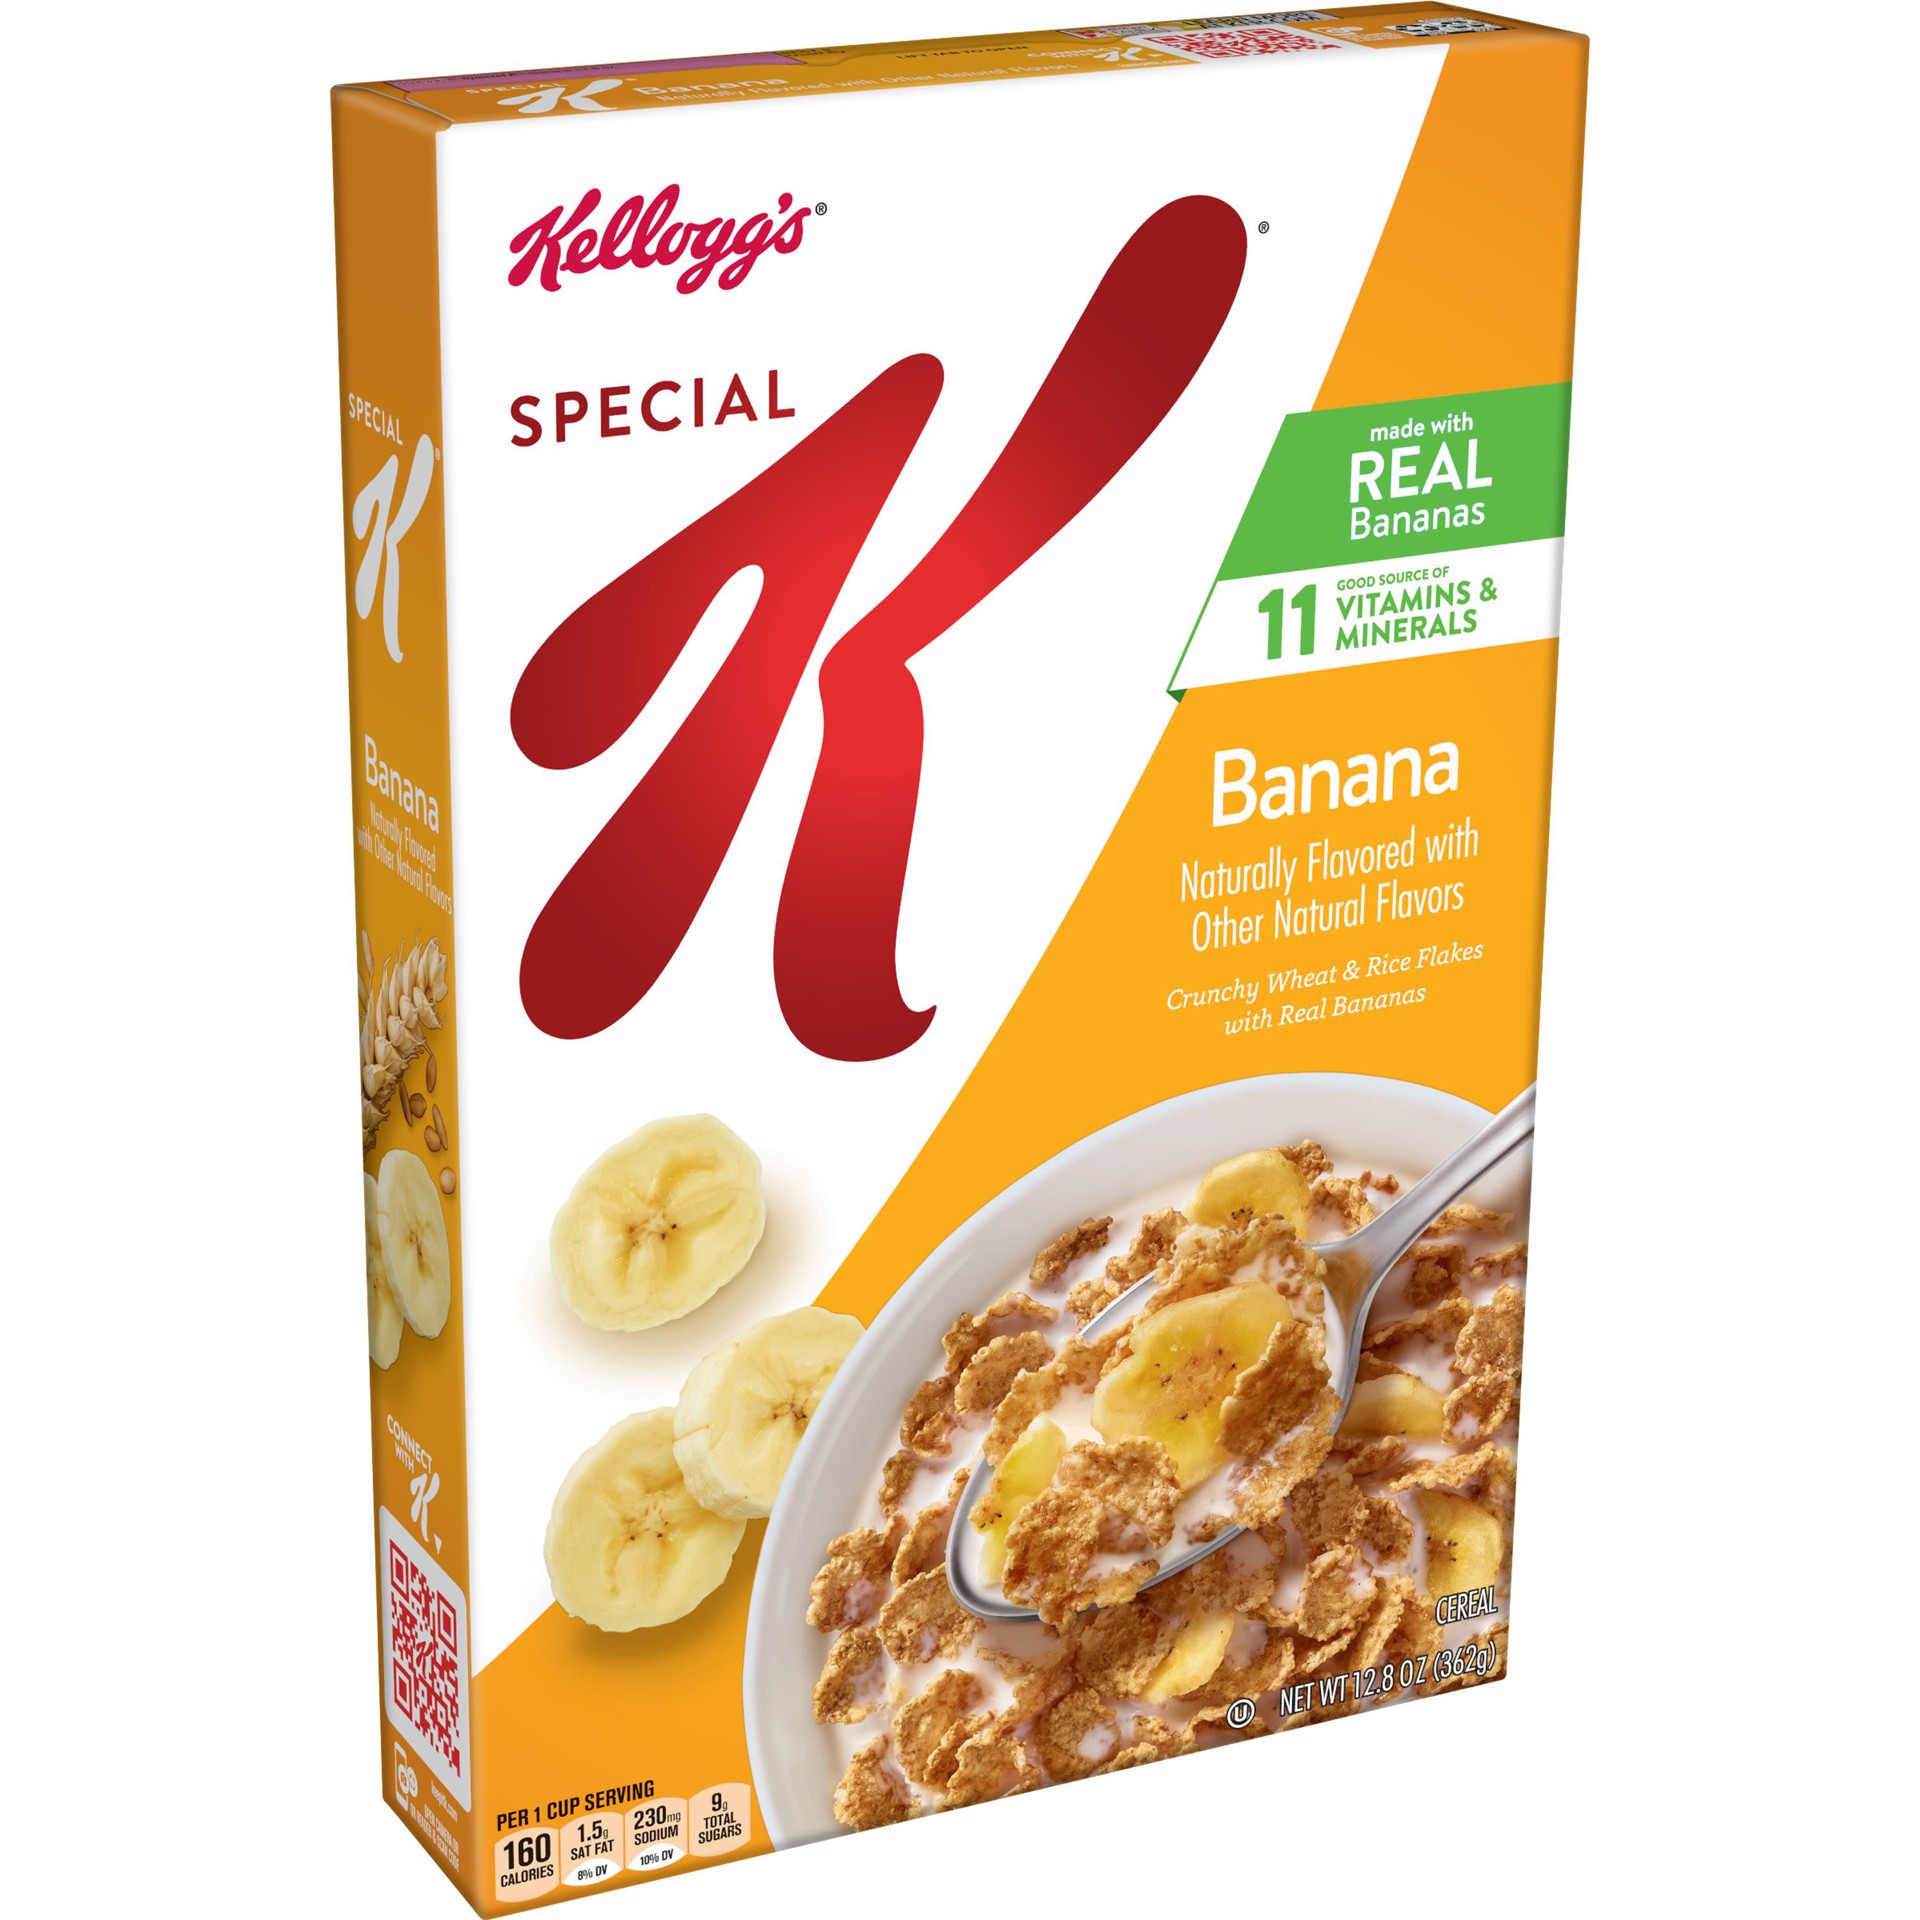 slide 1 of 5, Special K Kellogg's Special K Breakfast Cereal, 11 Vitamins and Minerals, Made with Real Bananas, Banana, 12.8oz Box, 1 Box, 12.8 oz